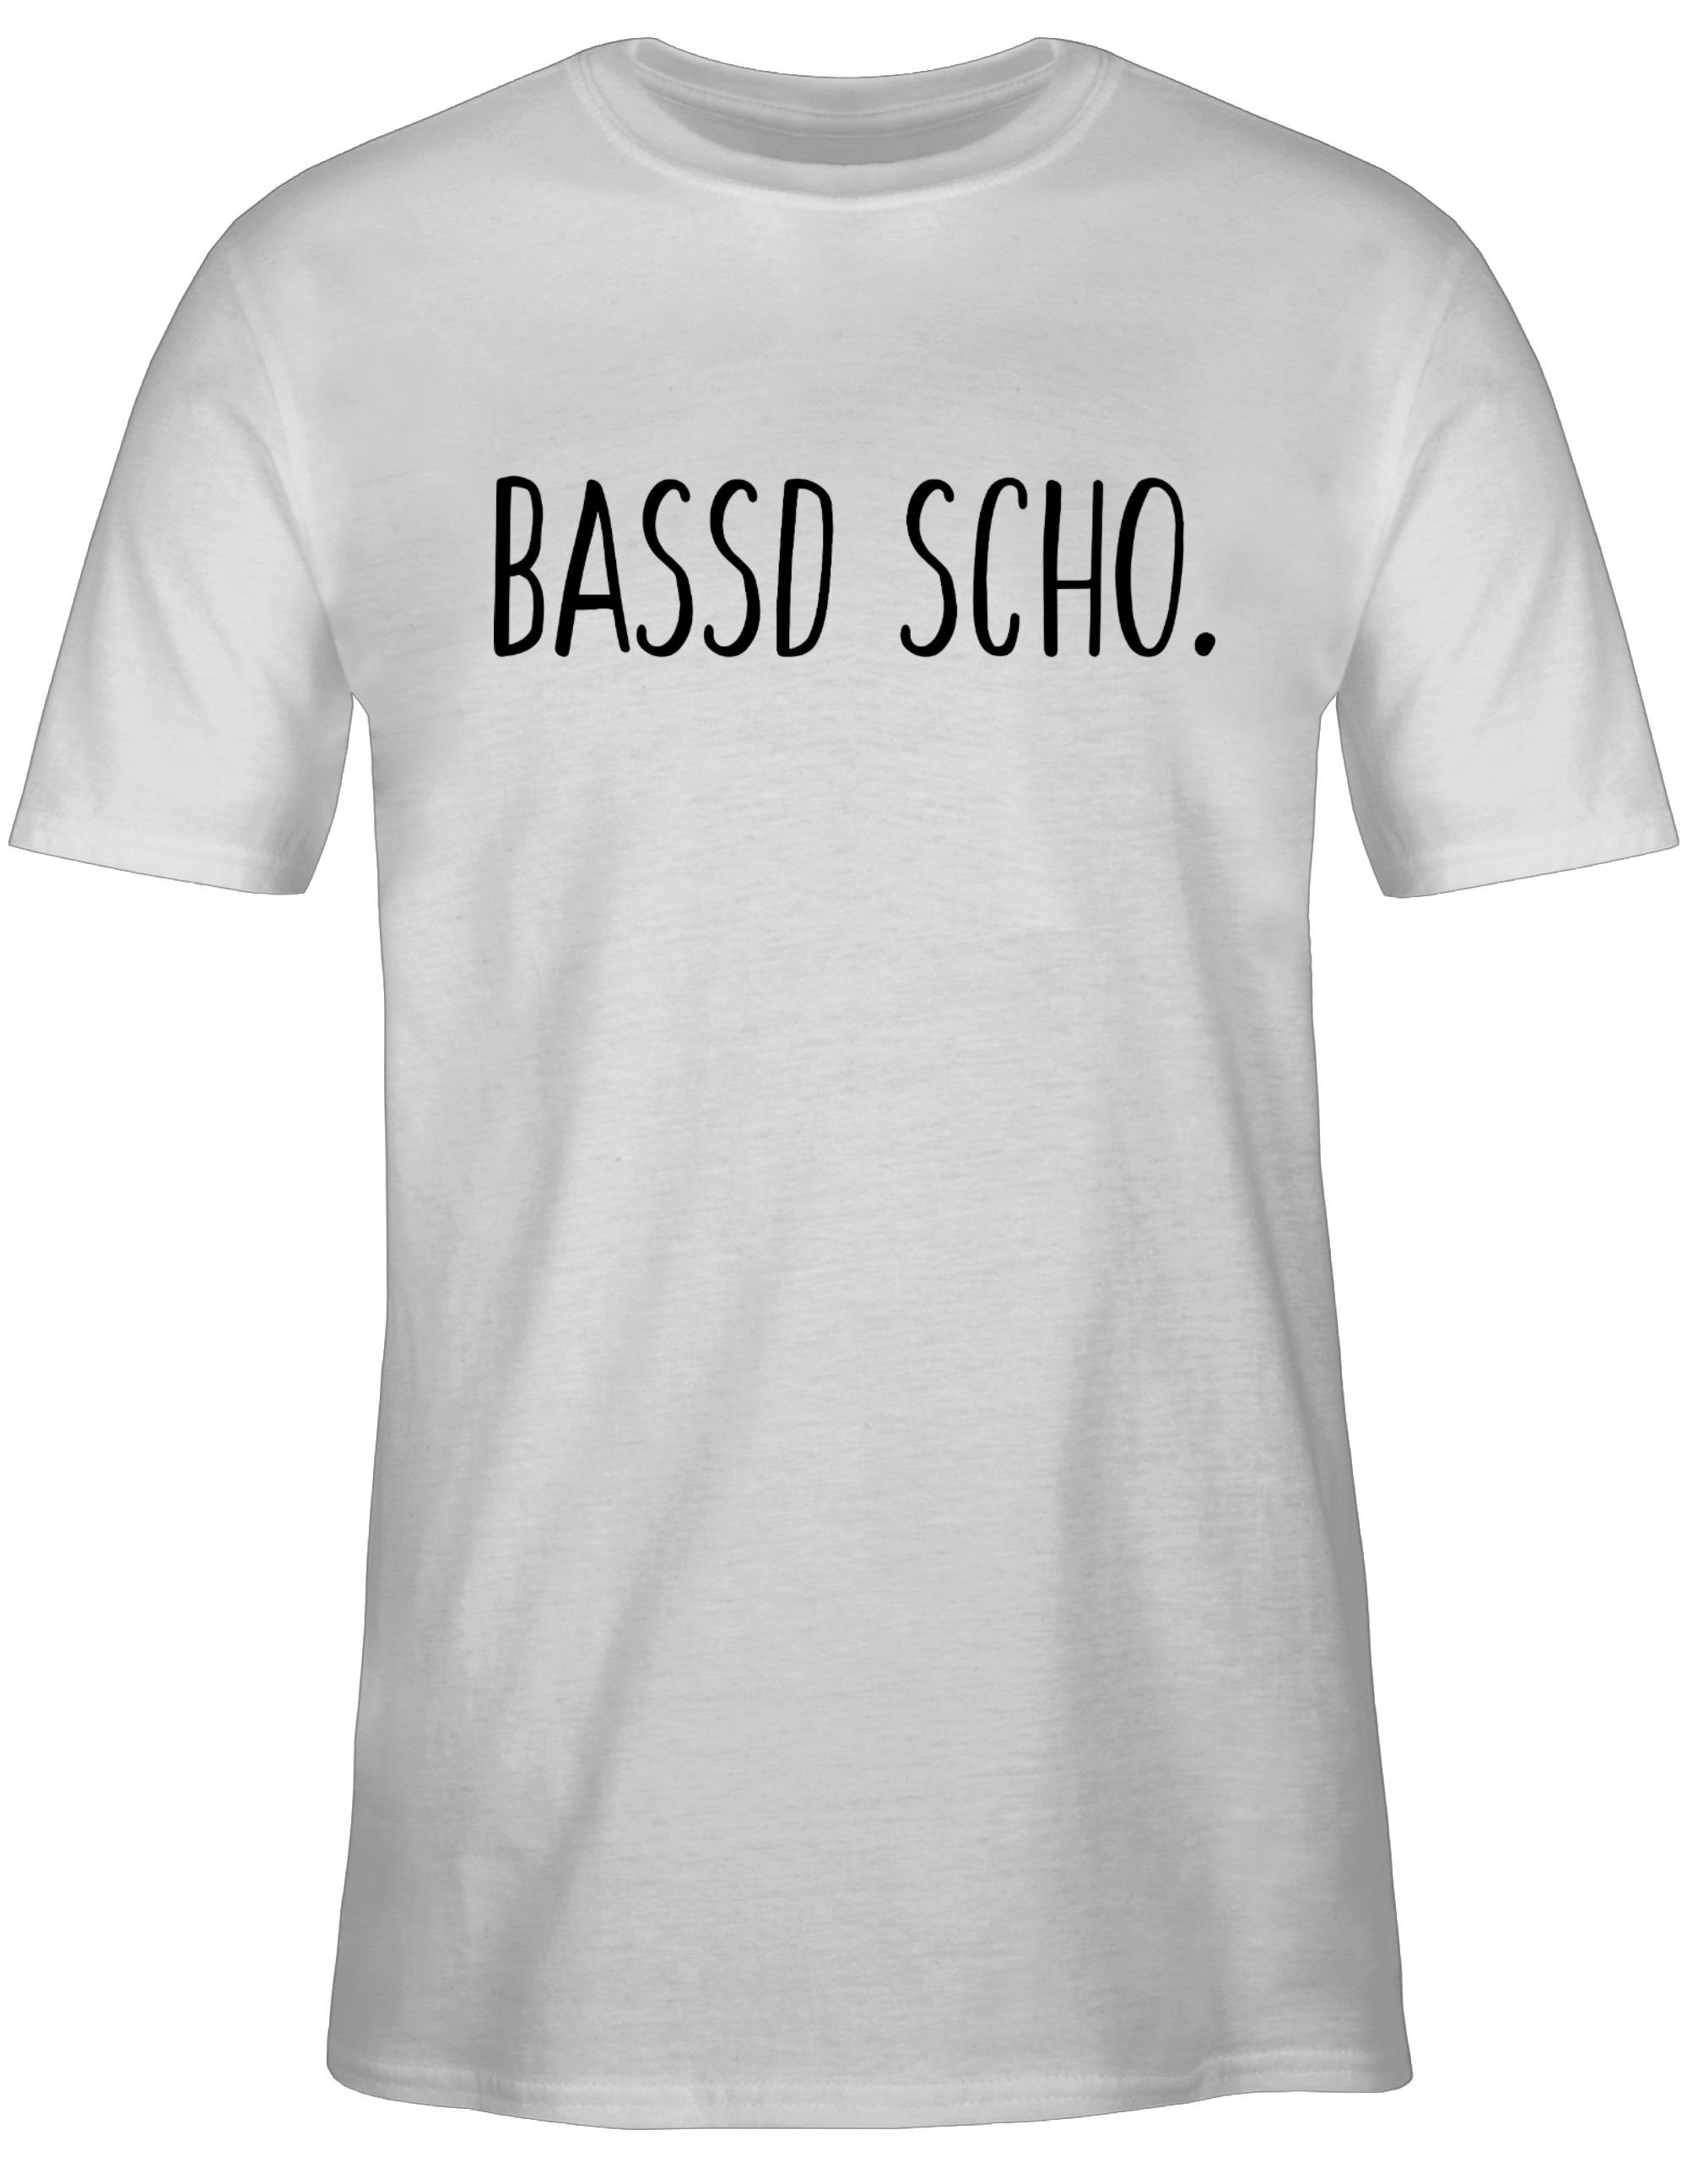 Herren Shirts Shirtracer T-Shirt Bassd scho. - Franken Kinder - Herren Premium T-Shirt